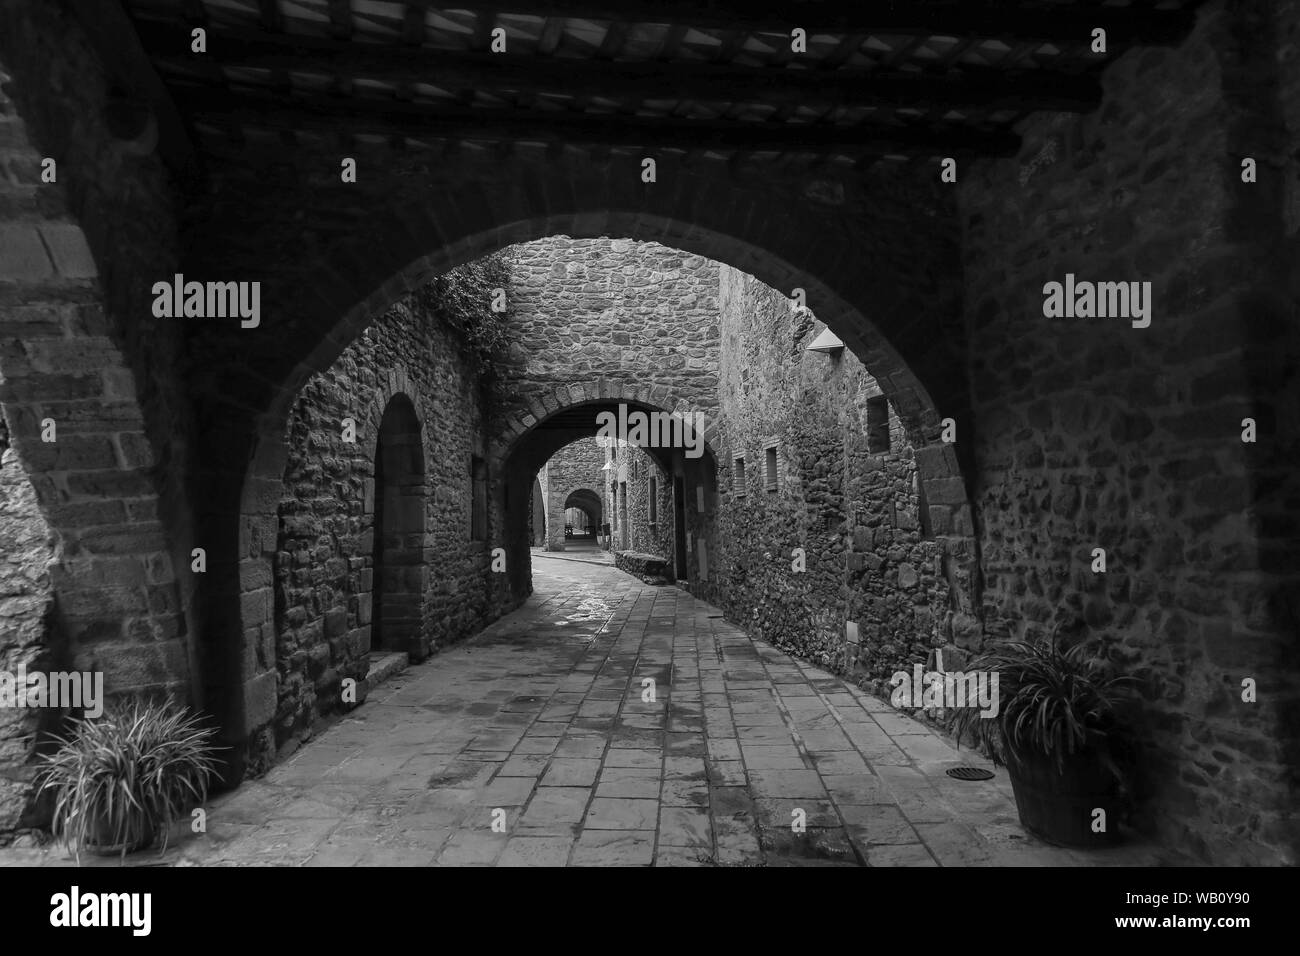 Pals, città medievale in Catalogna, Spagna Foto Stock